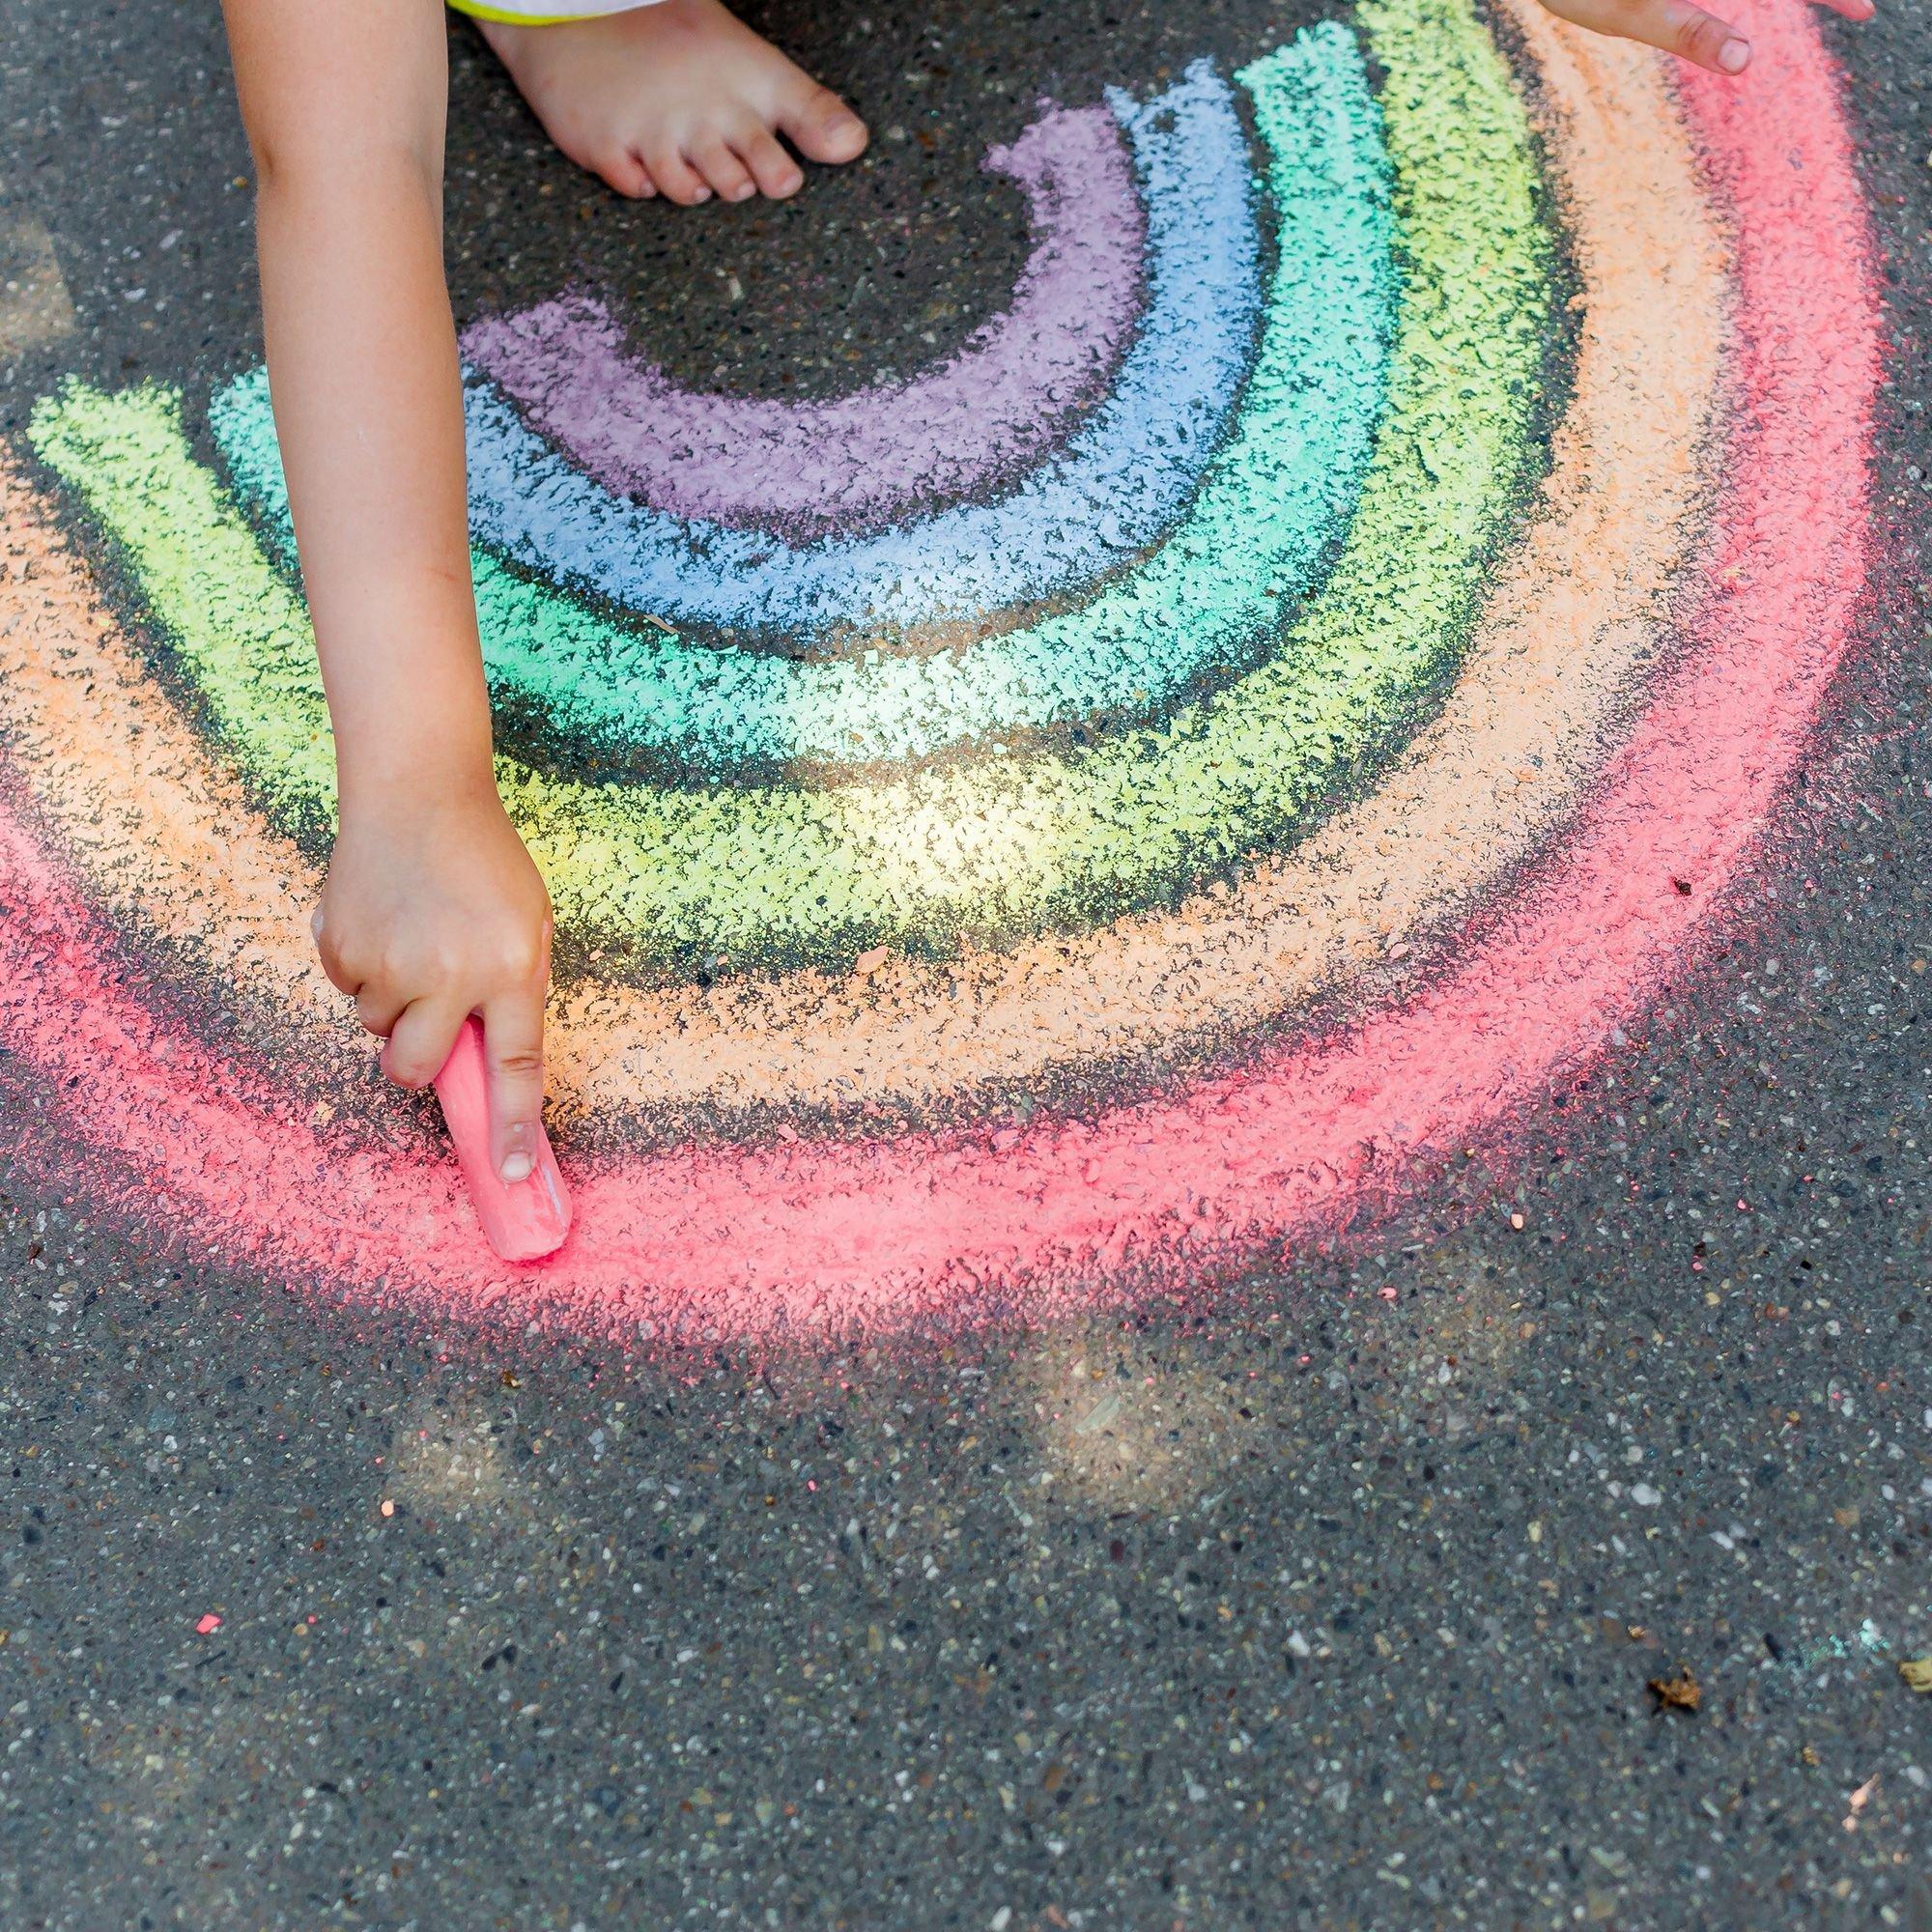 Assorted Color Sidewalk Chalk, 50pc